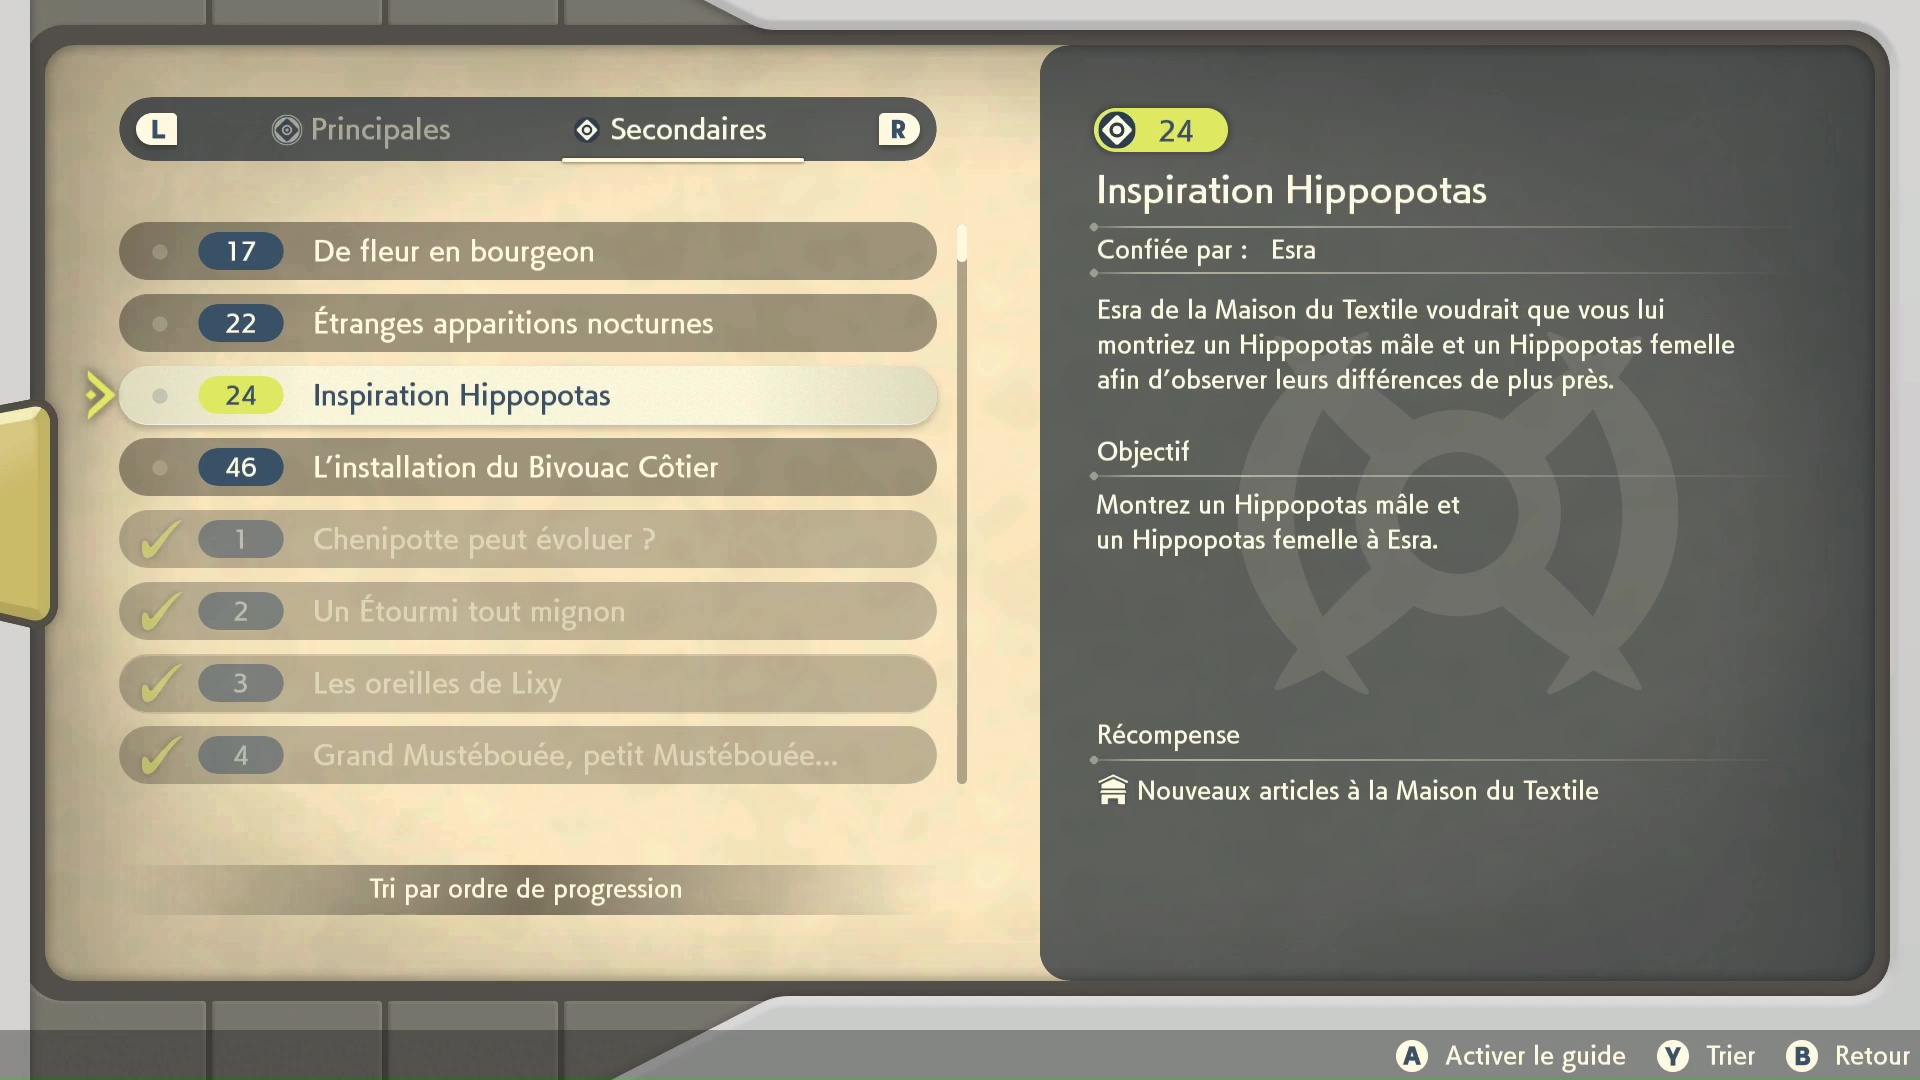 Inspiration hippopotas | légendes pokémon arceus